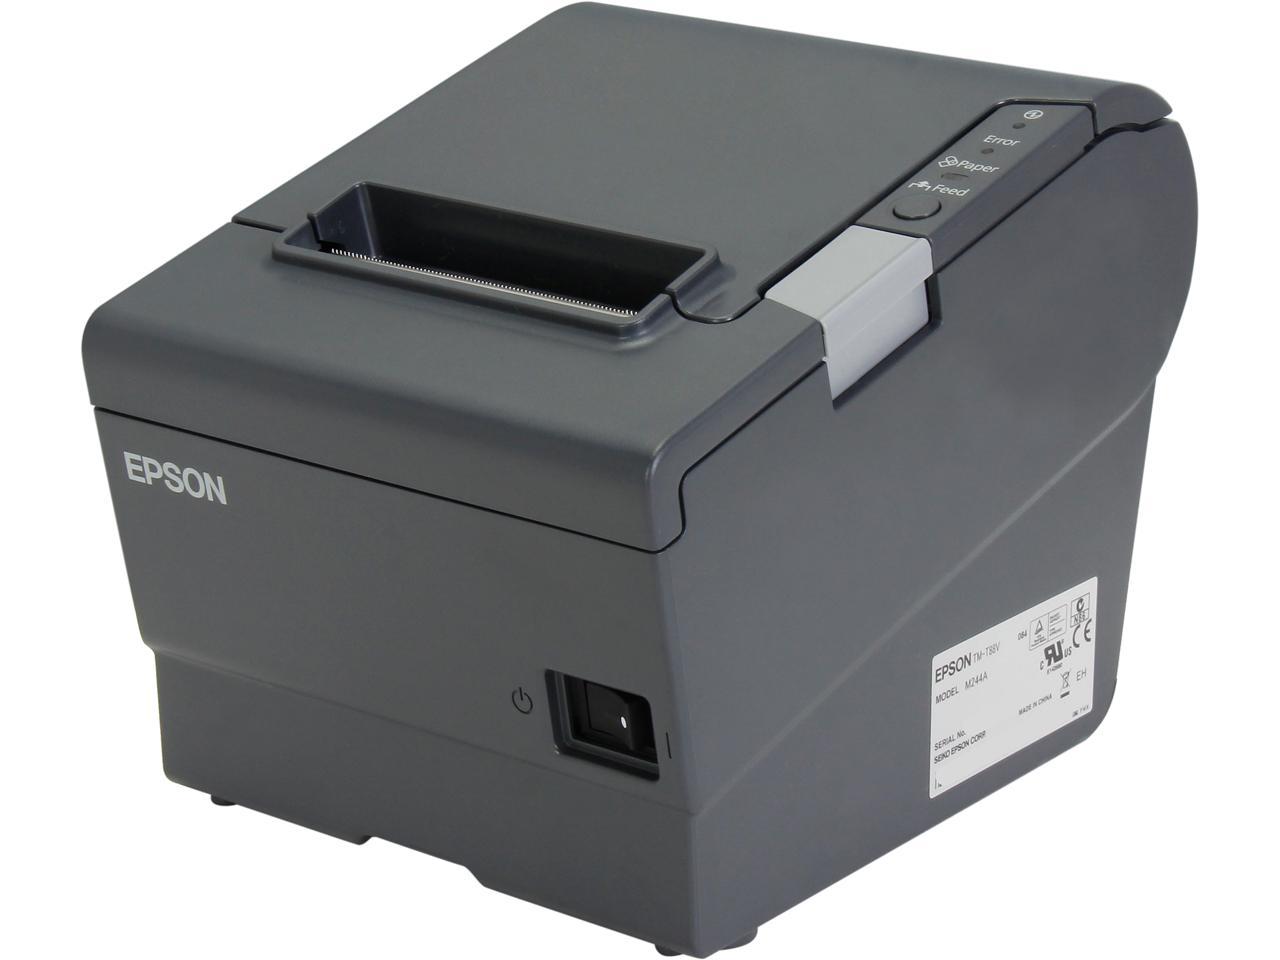 Epson Tm T88v Direct Thermal Printer Monochrome Desktop Receipt Print 9213